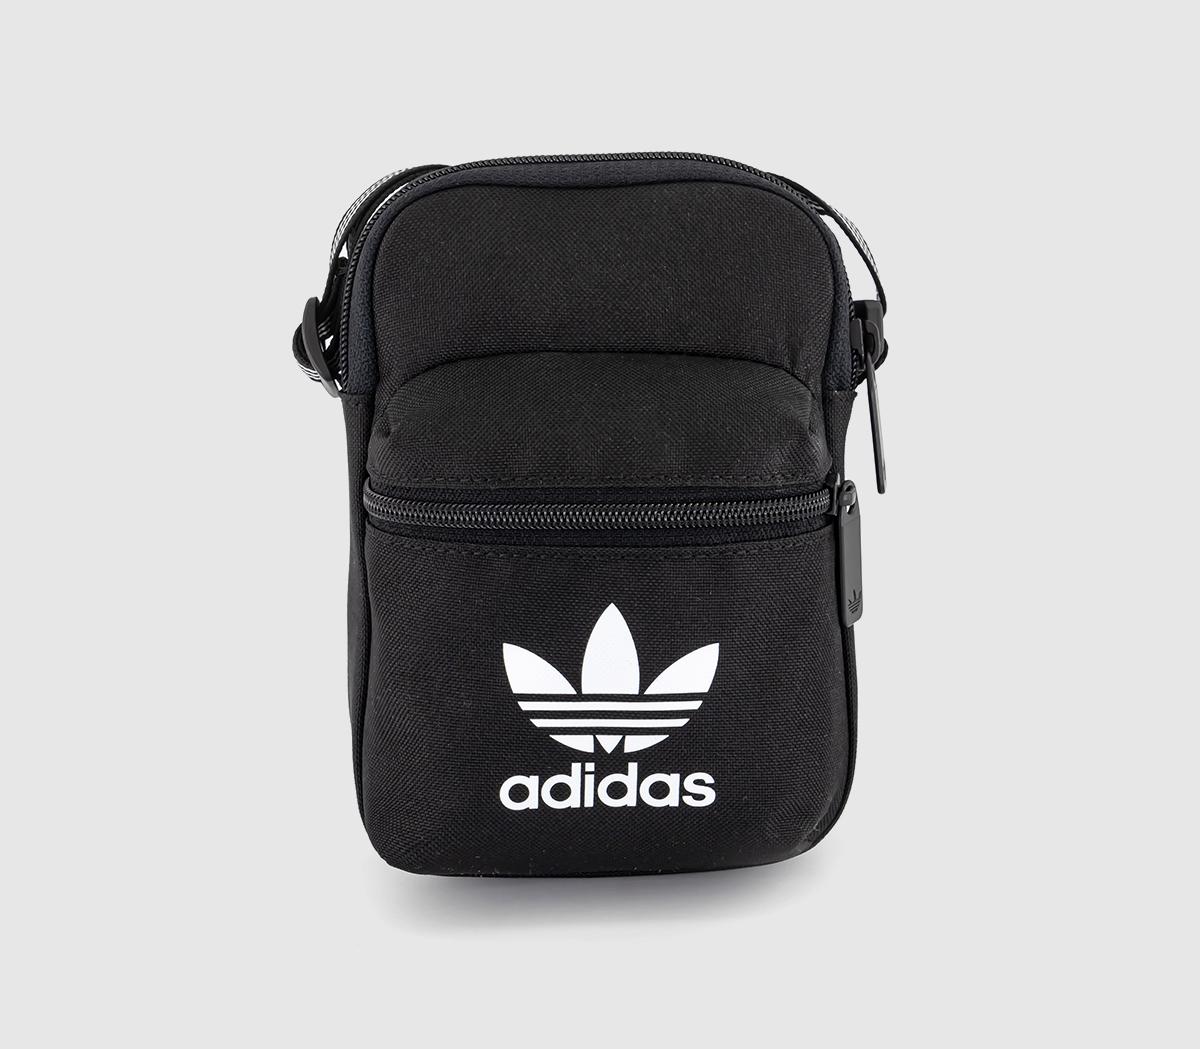 adidas Festival Bag Black - Backpacks and Bags